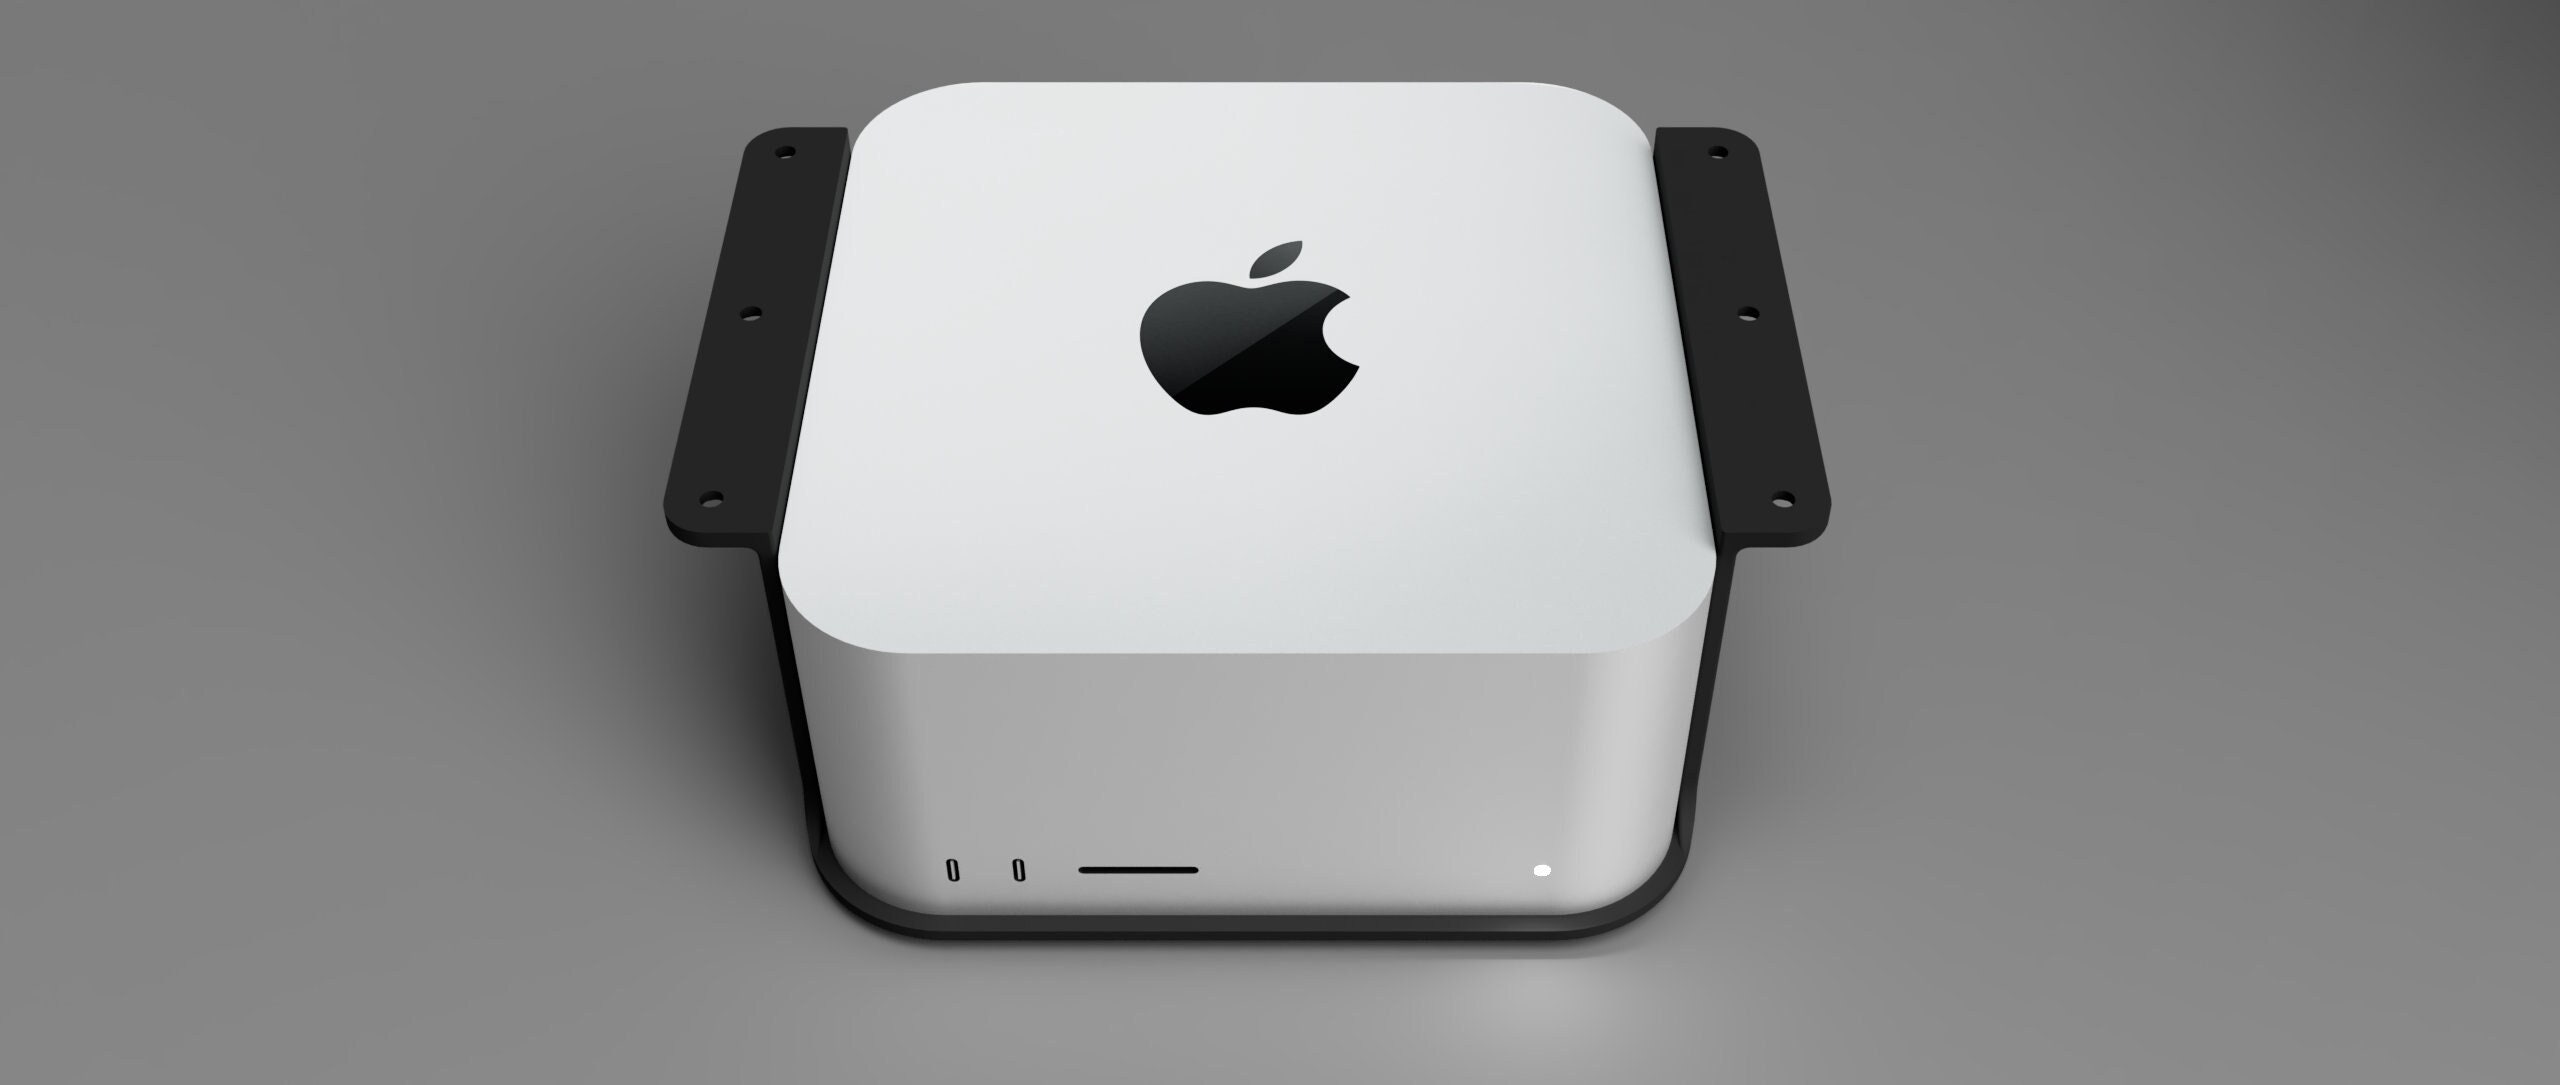 HumanCentric Under Desk Mount Compatible with Mac Studio Mount, Secure or  Hide Your Mac Studio Under Desk with an Apple Mac Studio Mount, Desk